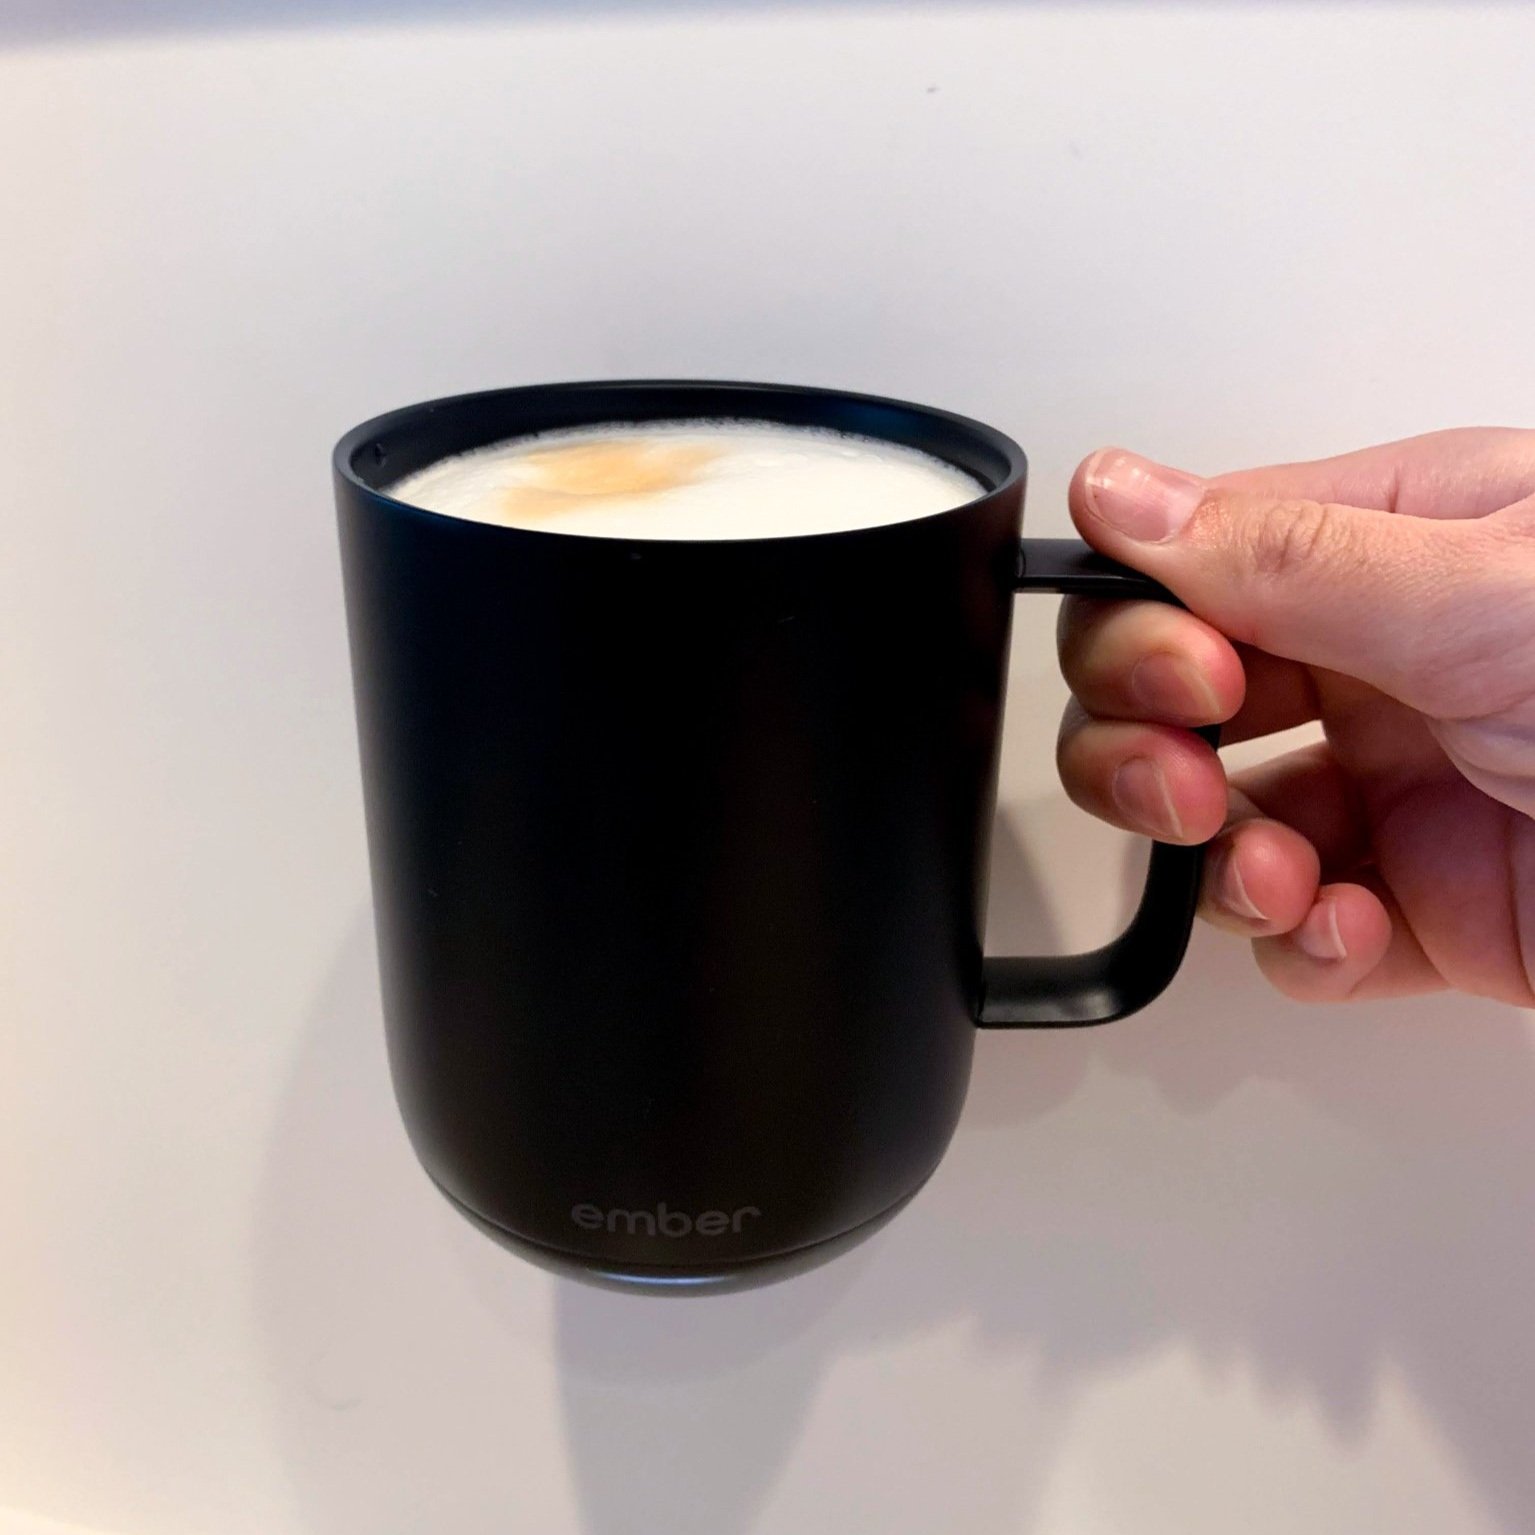 Ember Smart Mug Review: The Perfect Temperature — Sypnotix